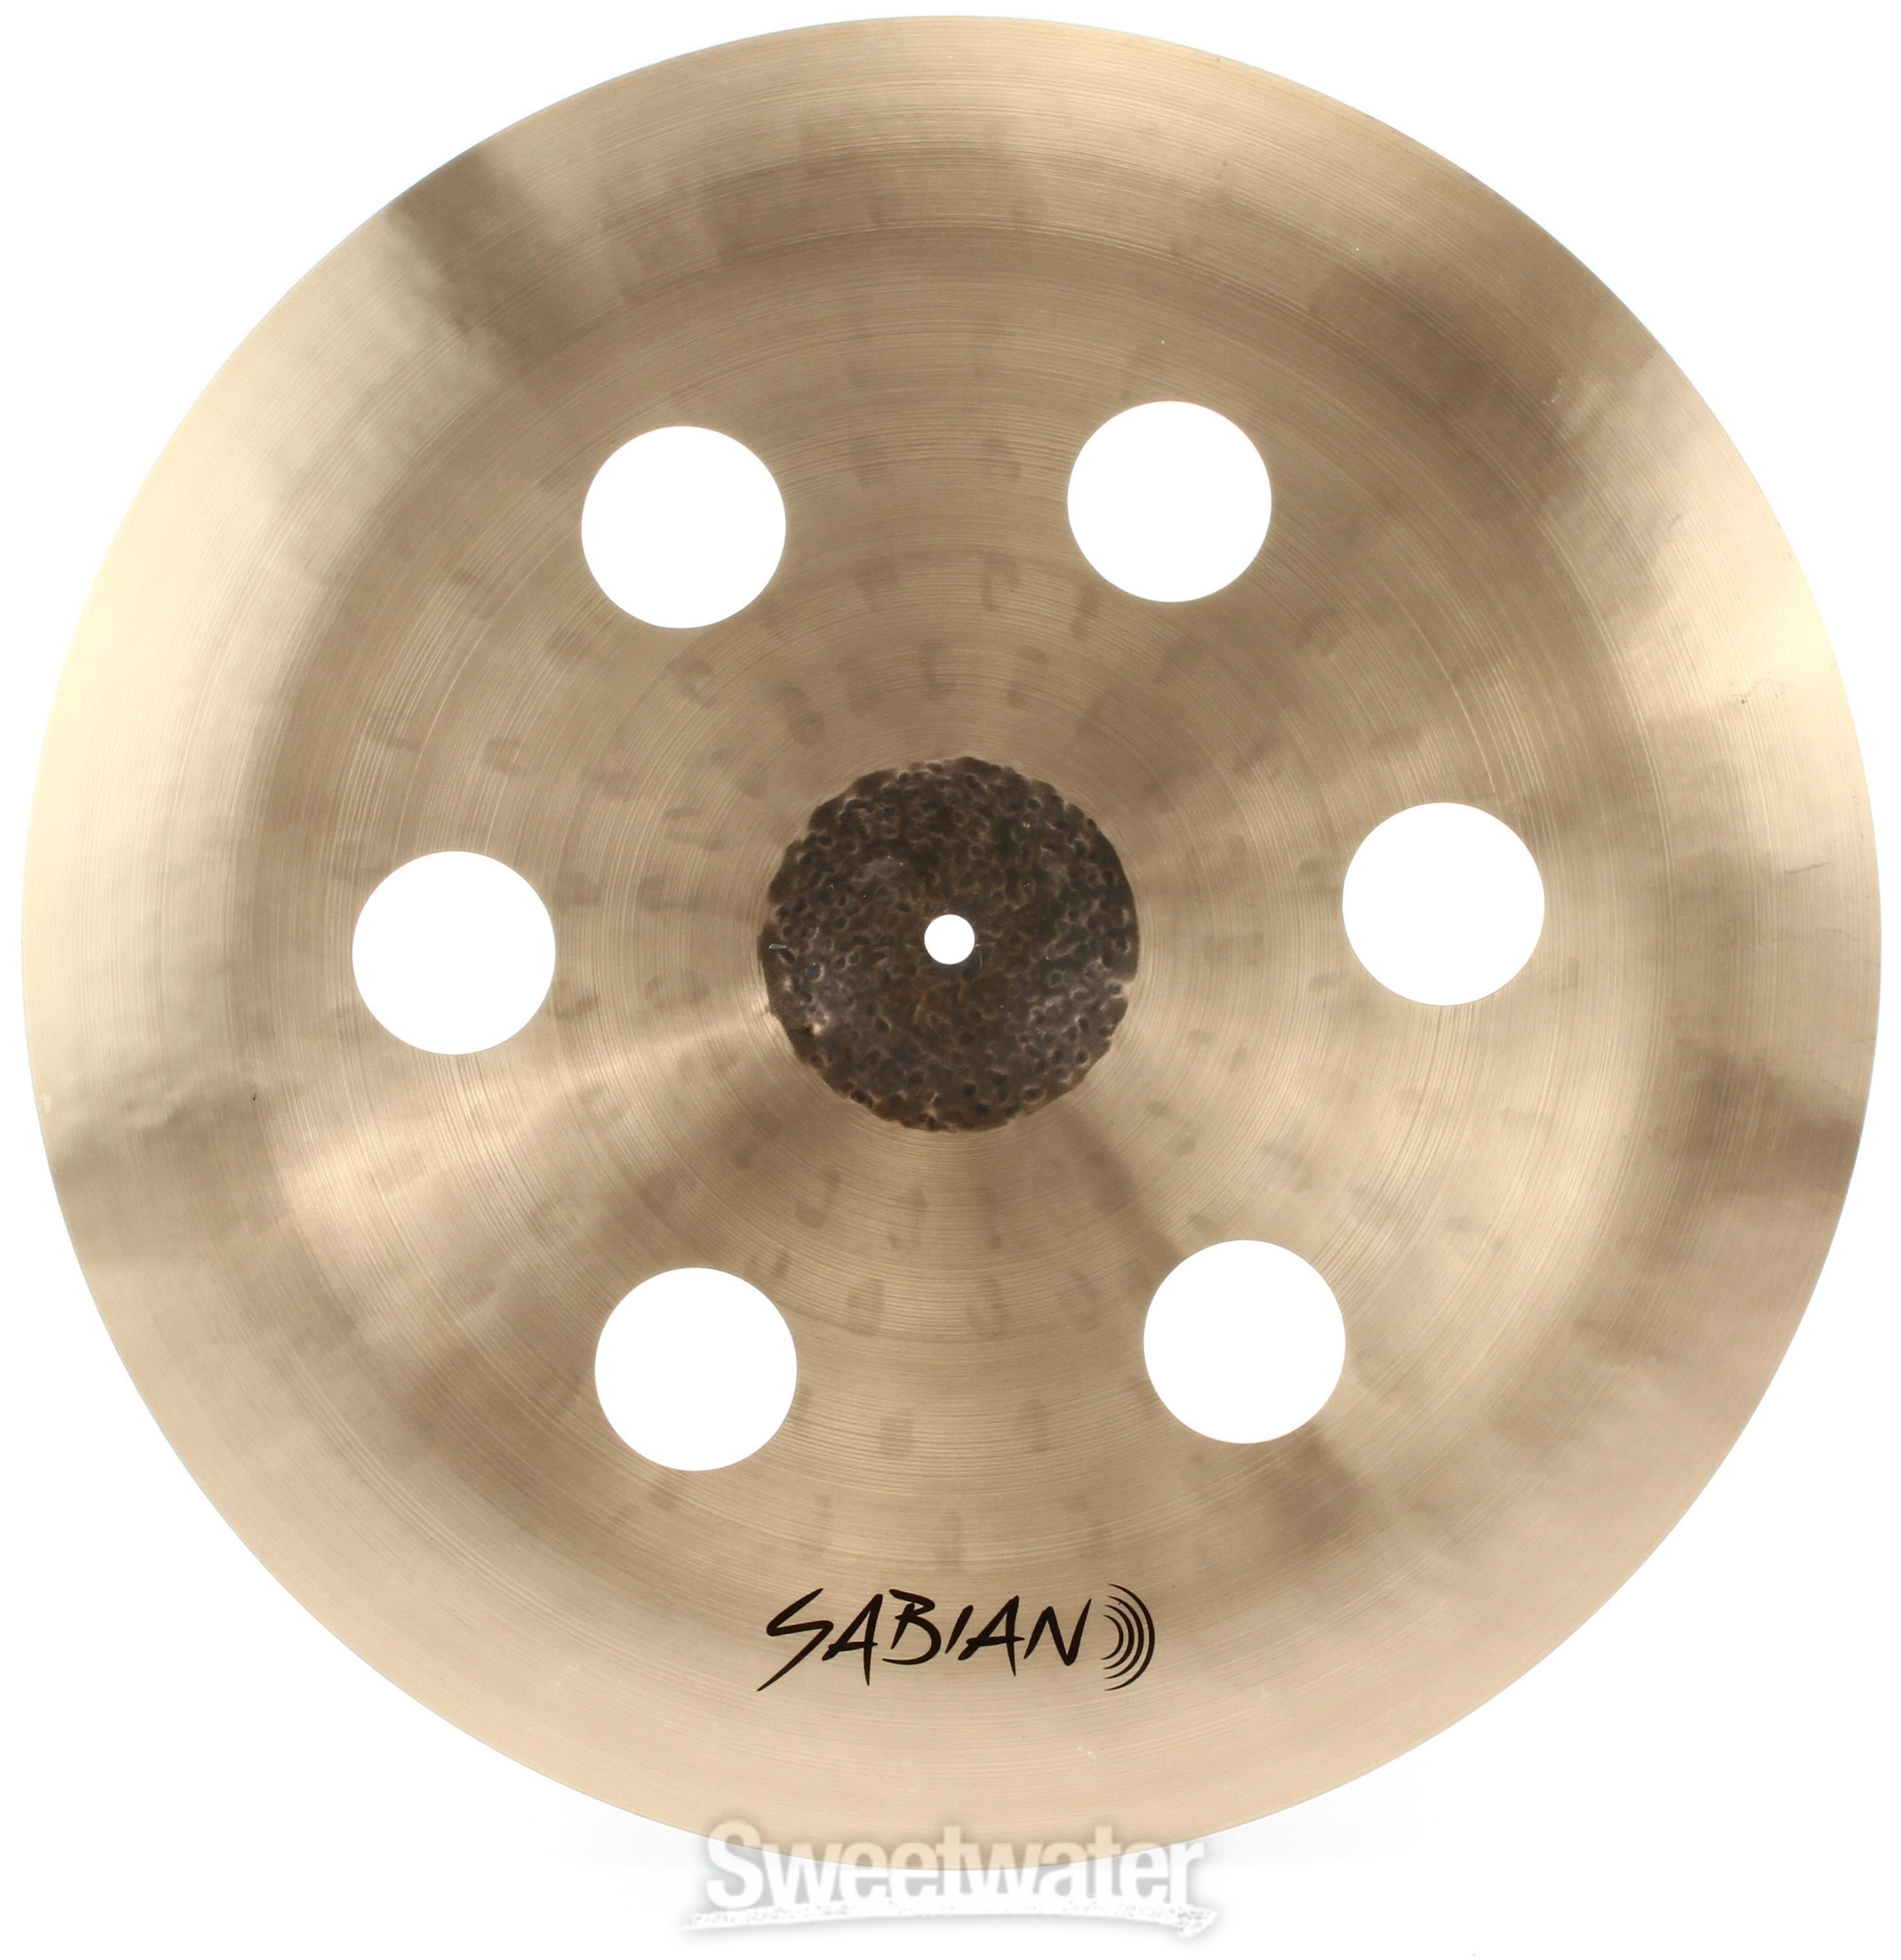 Sabian 19-inch HHX Complex O-Zone China Cymbal